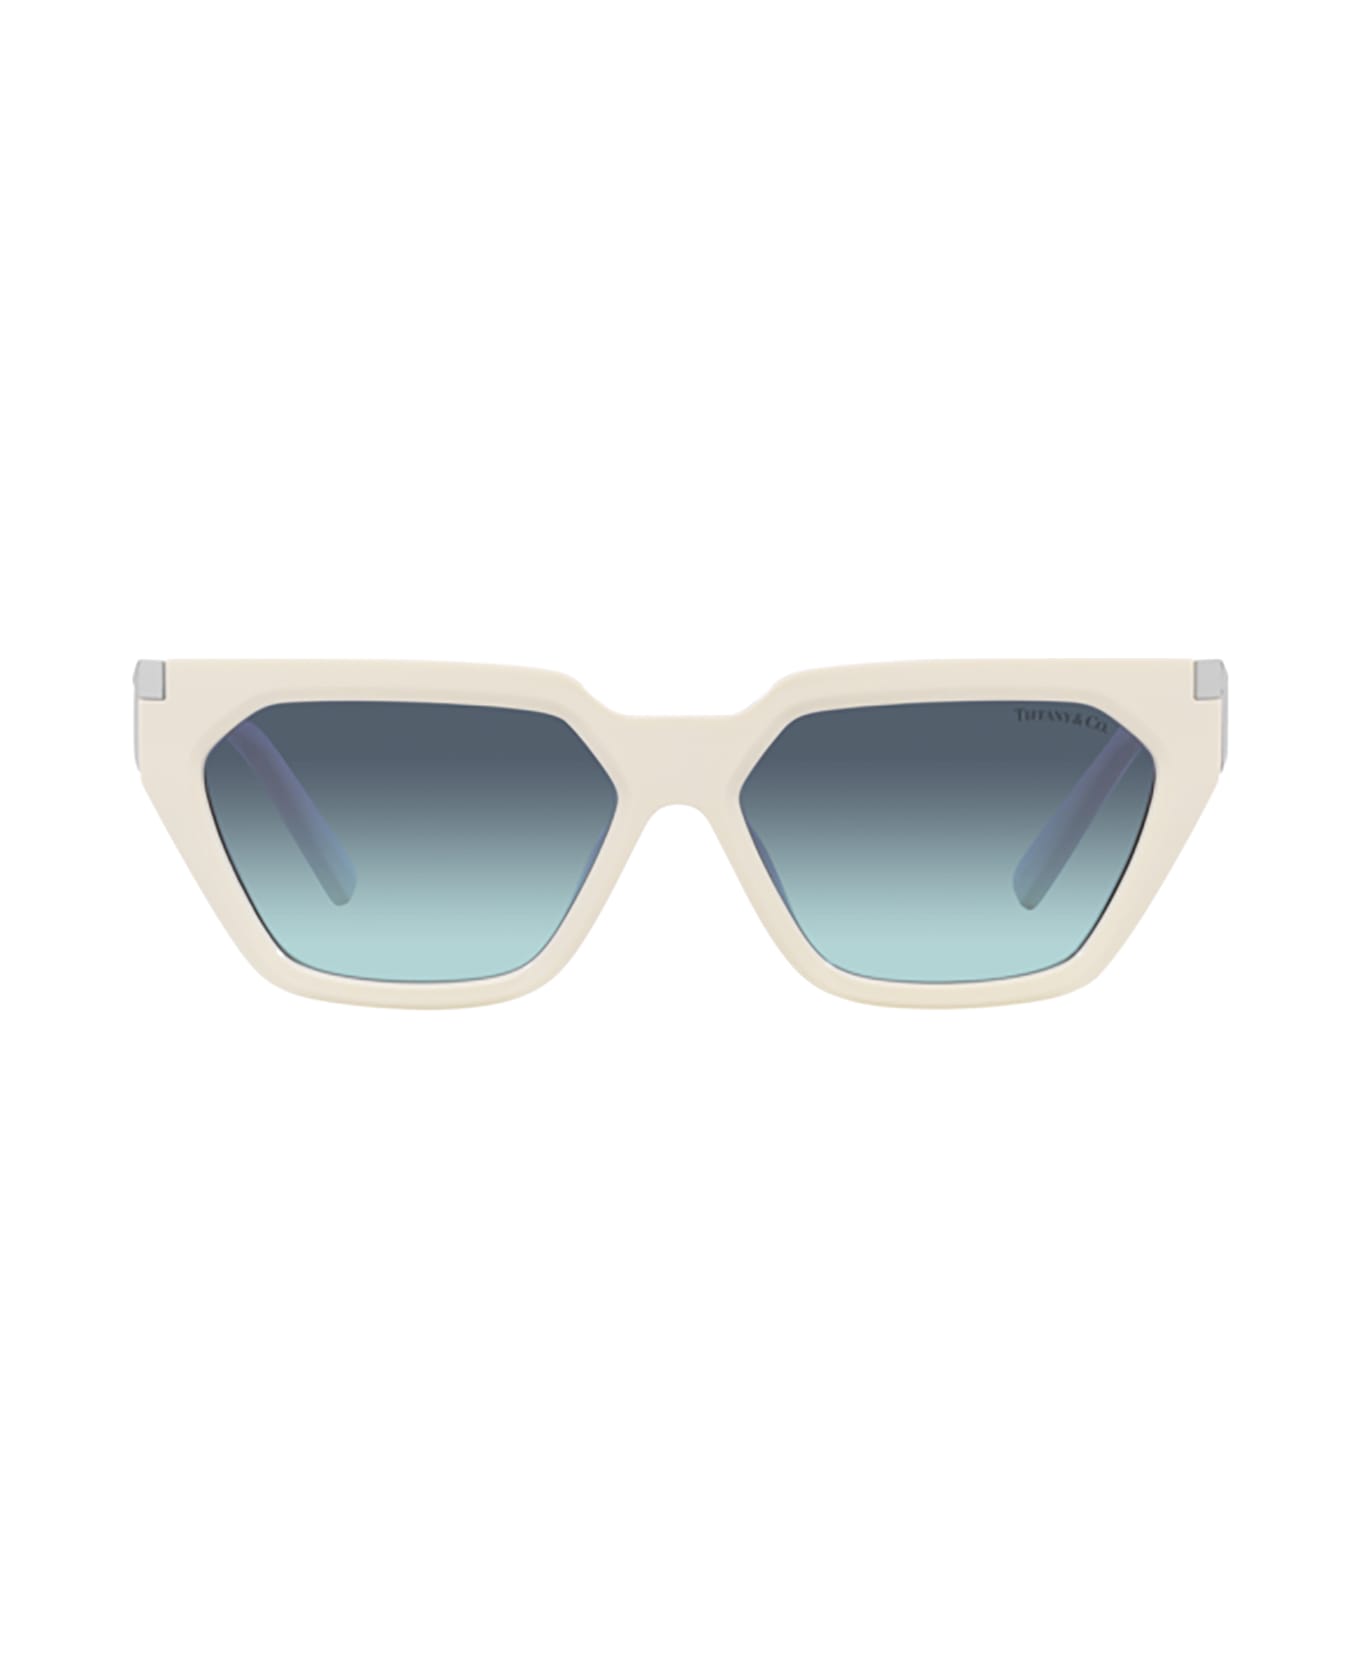 Tiffany & Co. Tf4205u Ivory Sunglasses - Ivory